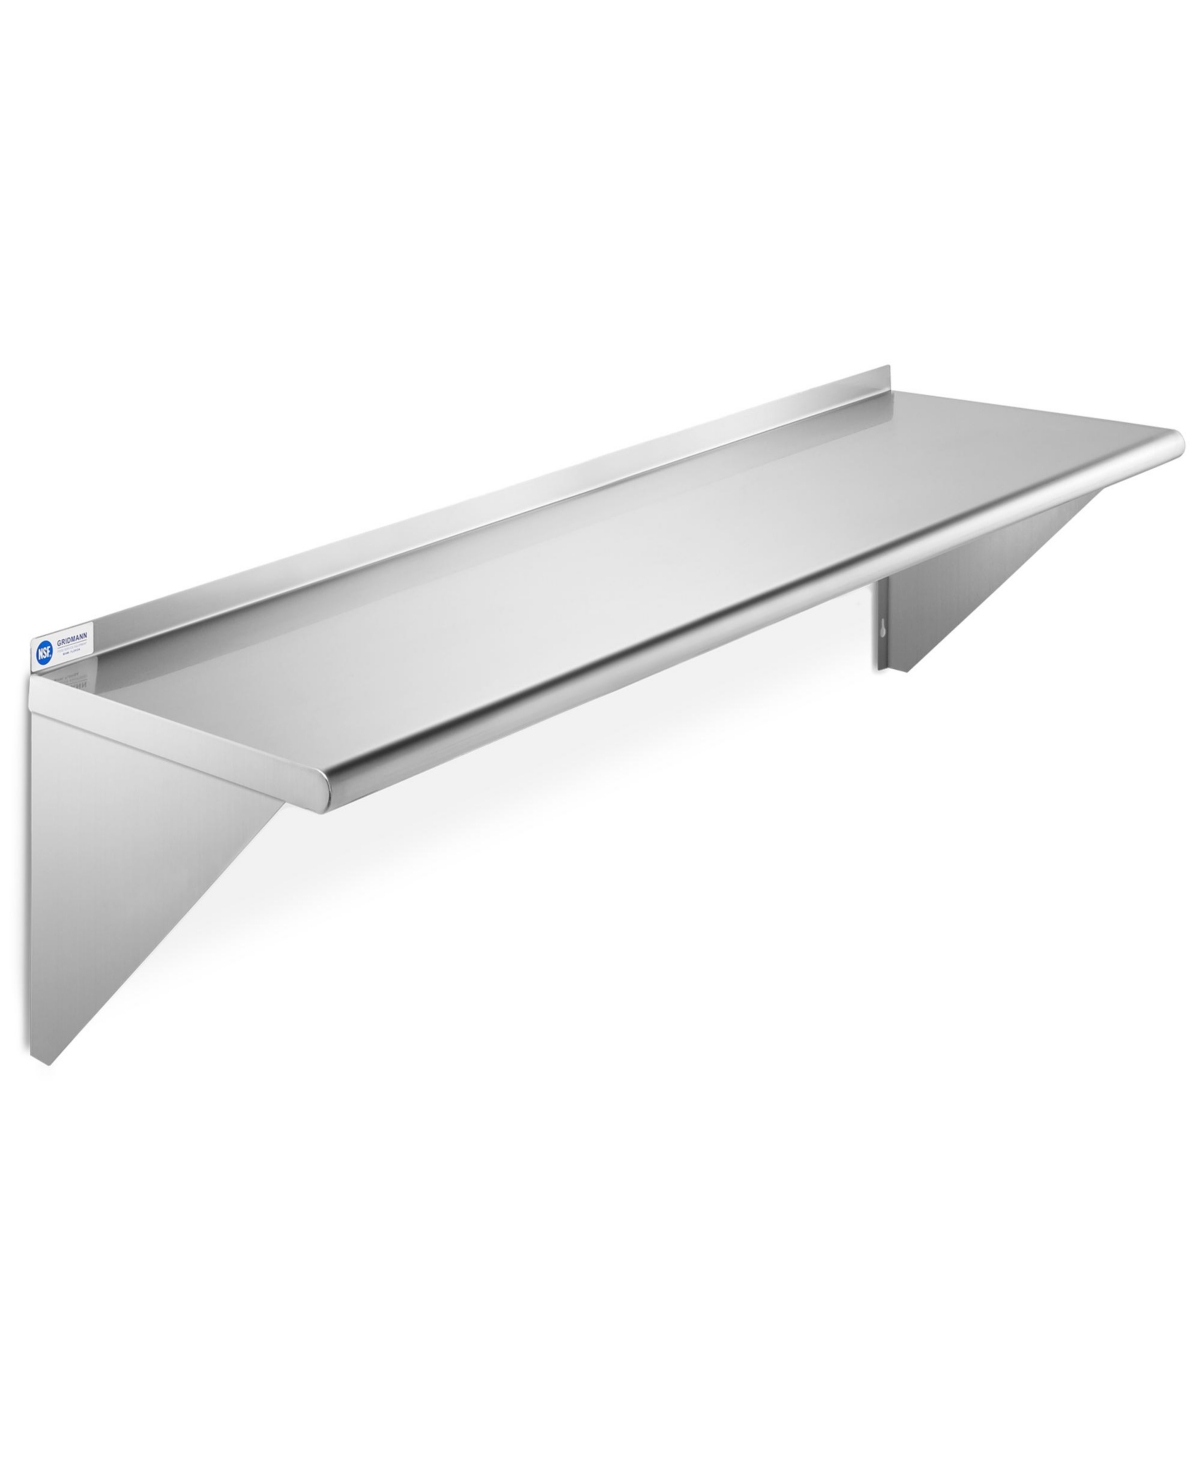 12" x 48" Nsf Stainless Steel Kitchen Wall Mount Shelf w/ Backsplash - Silver